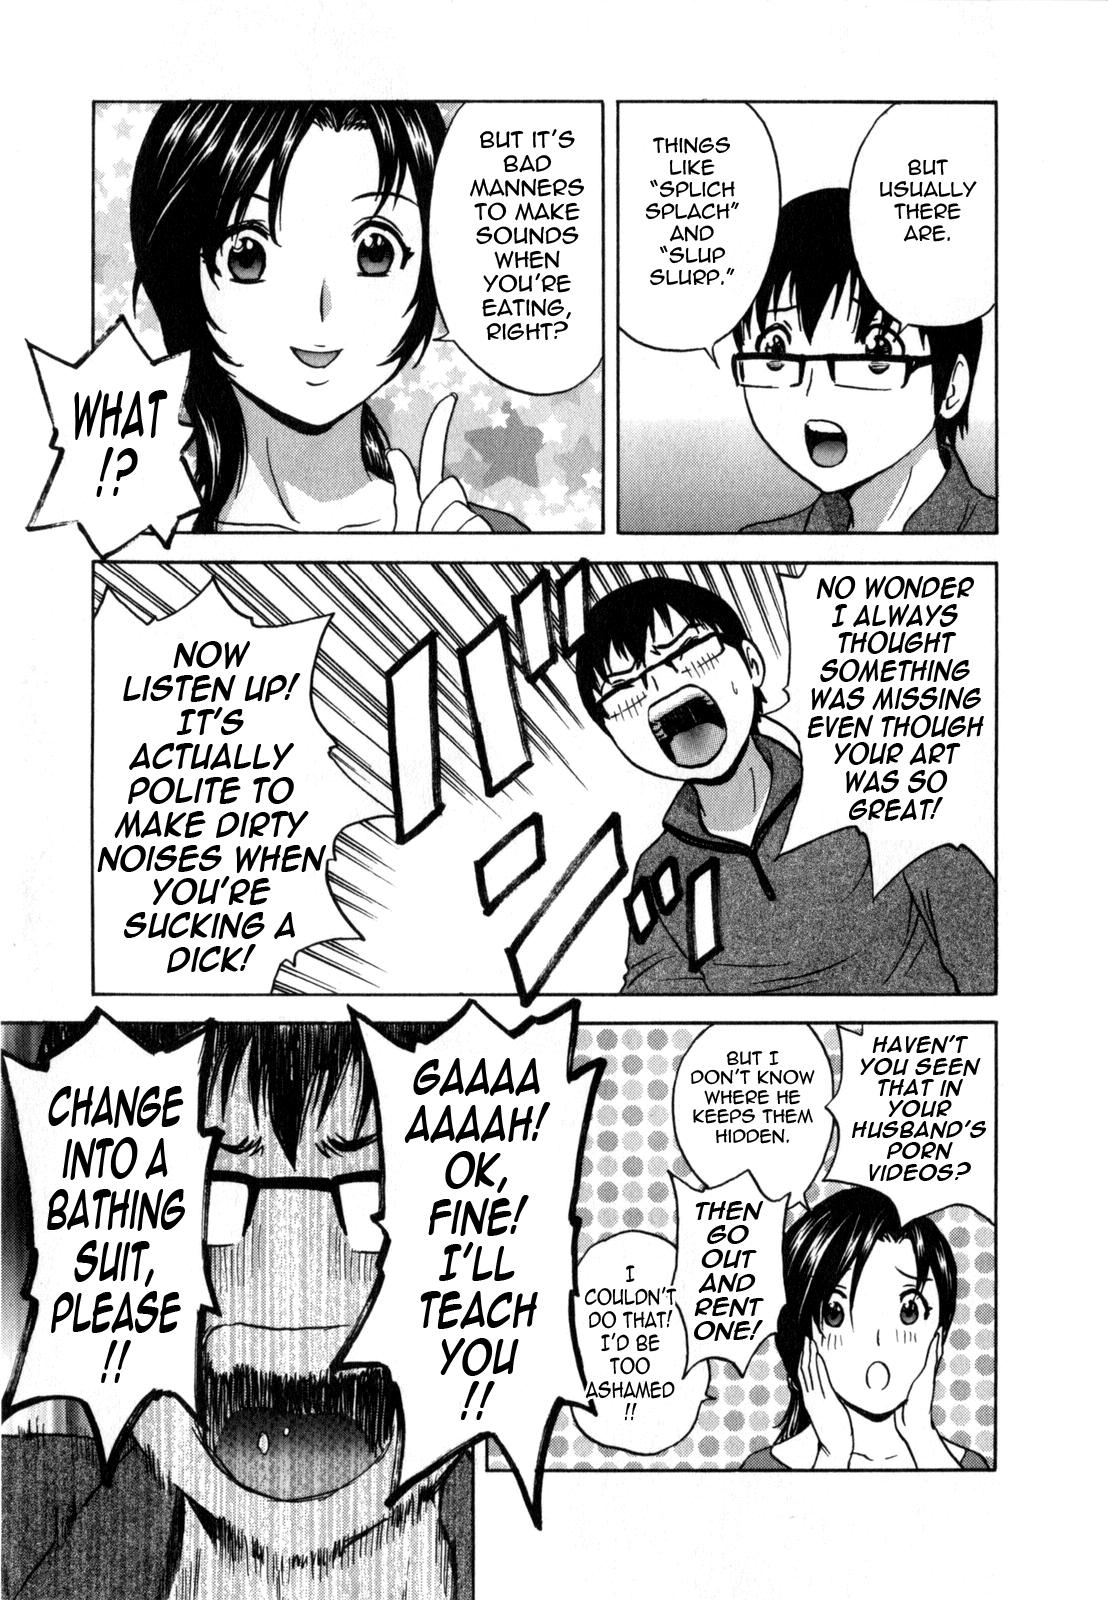 [Hidemaru] Life with Married Women Just Like a Manga 1 - Ch. 1-9 [English] {Tadanohito} 15